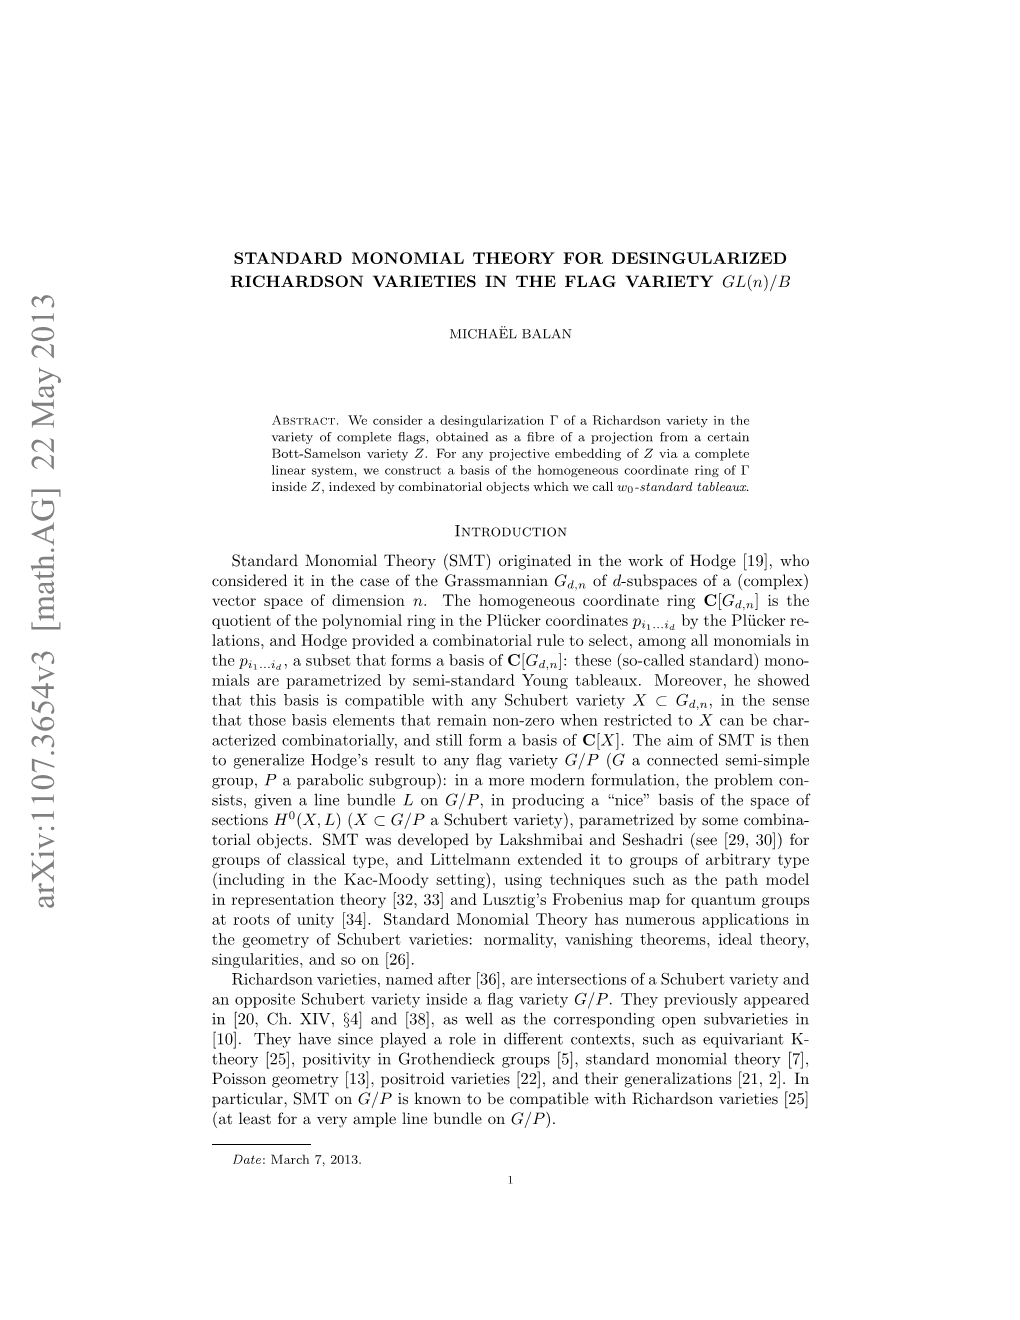 Standard Monomial Theory for Desingularized Richardson